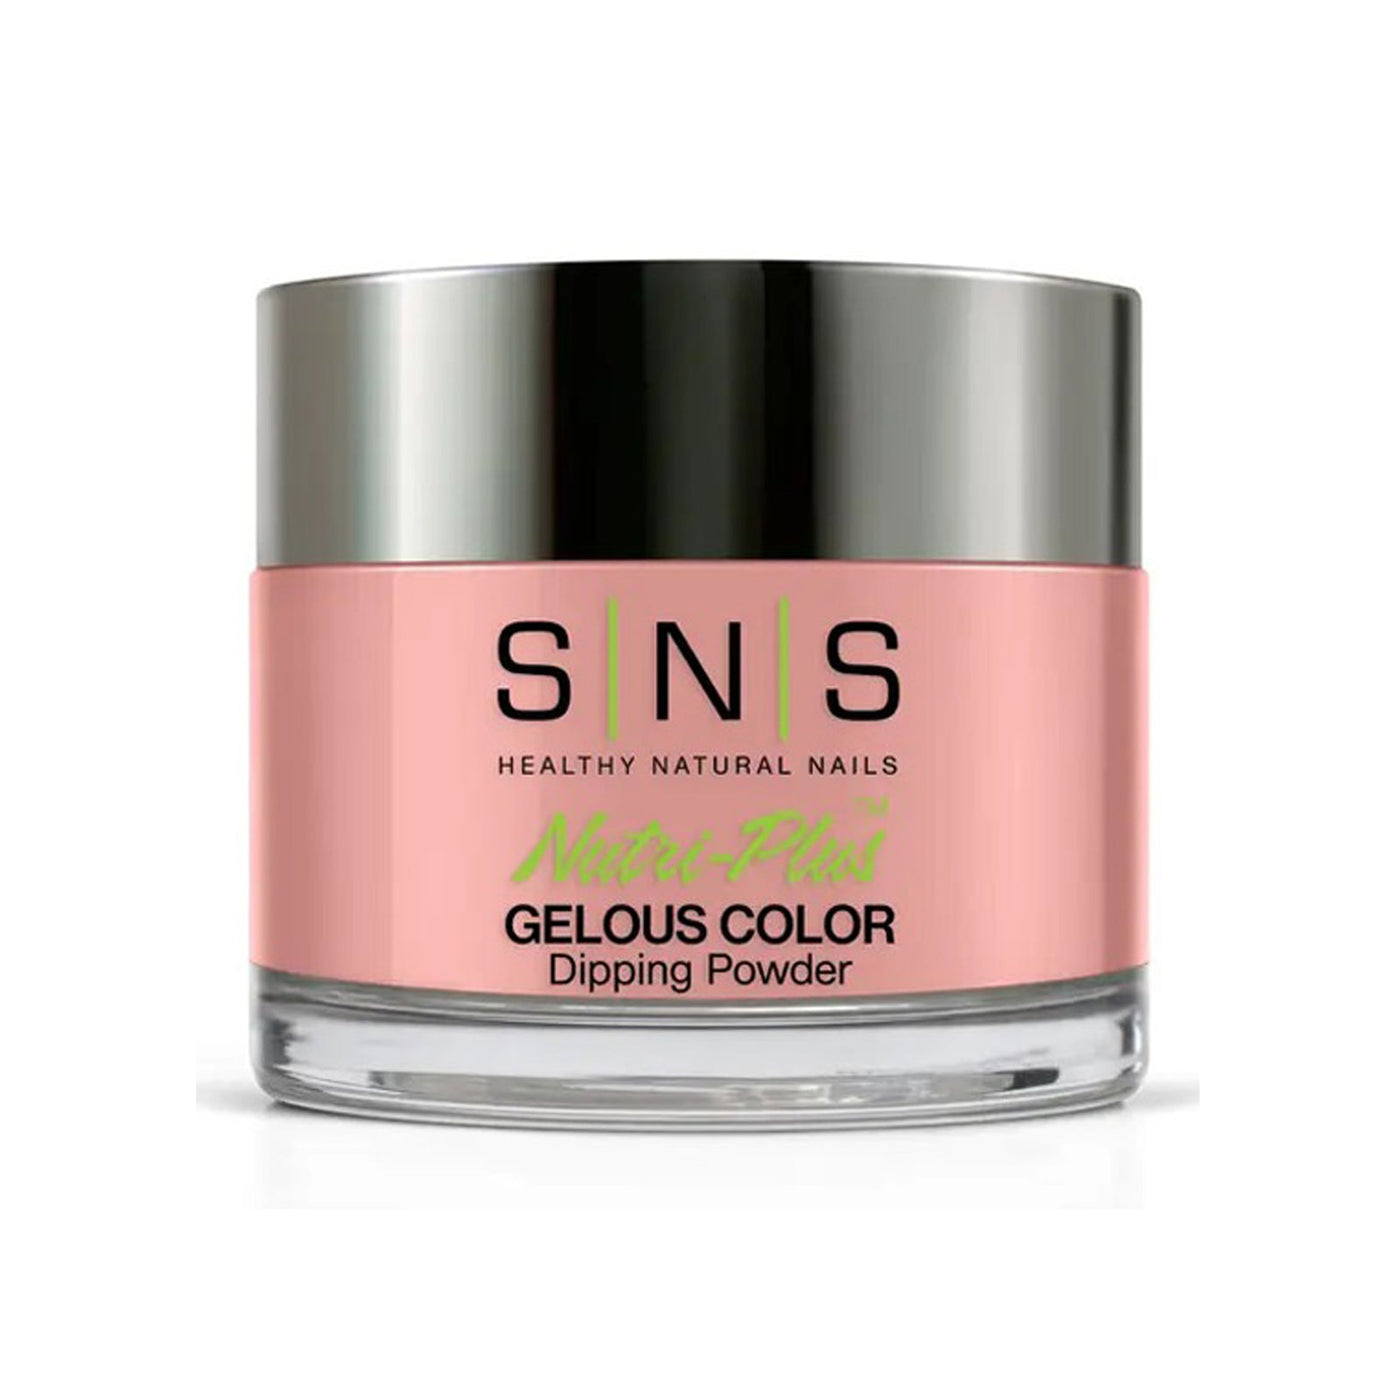 SNS Gelous Color Dipping Powder SL07 Amuse Me (43g) packaging